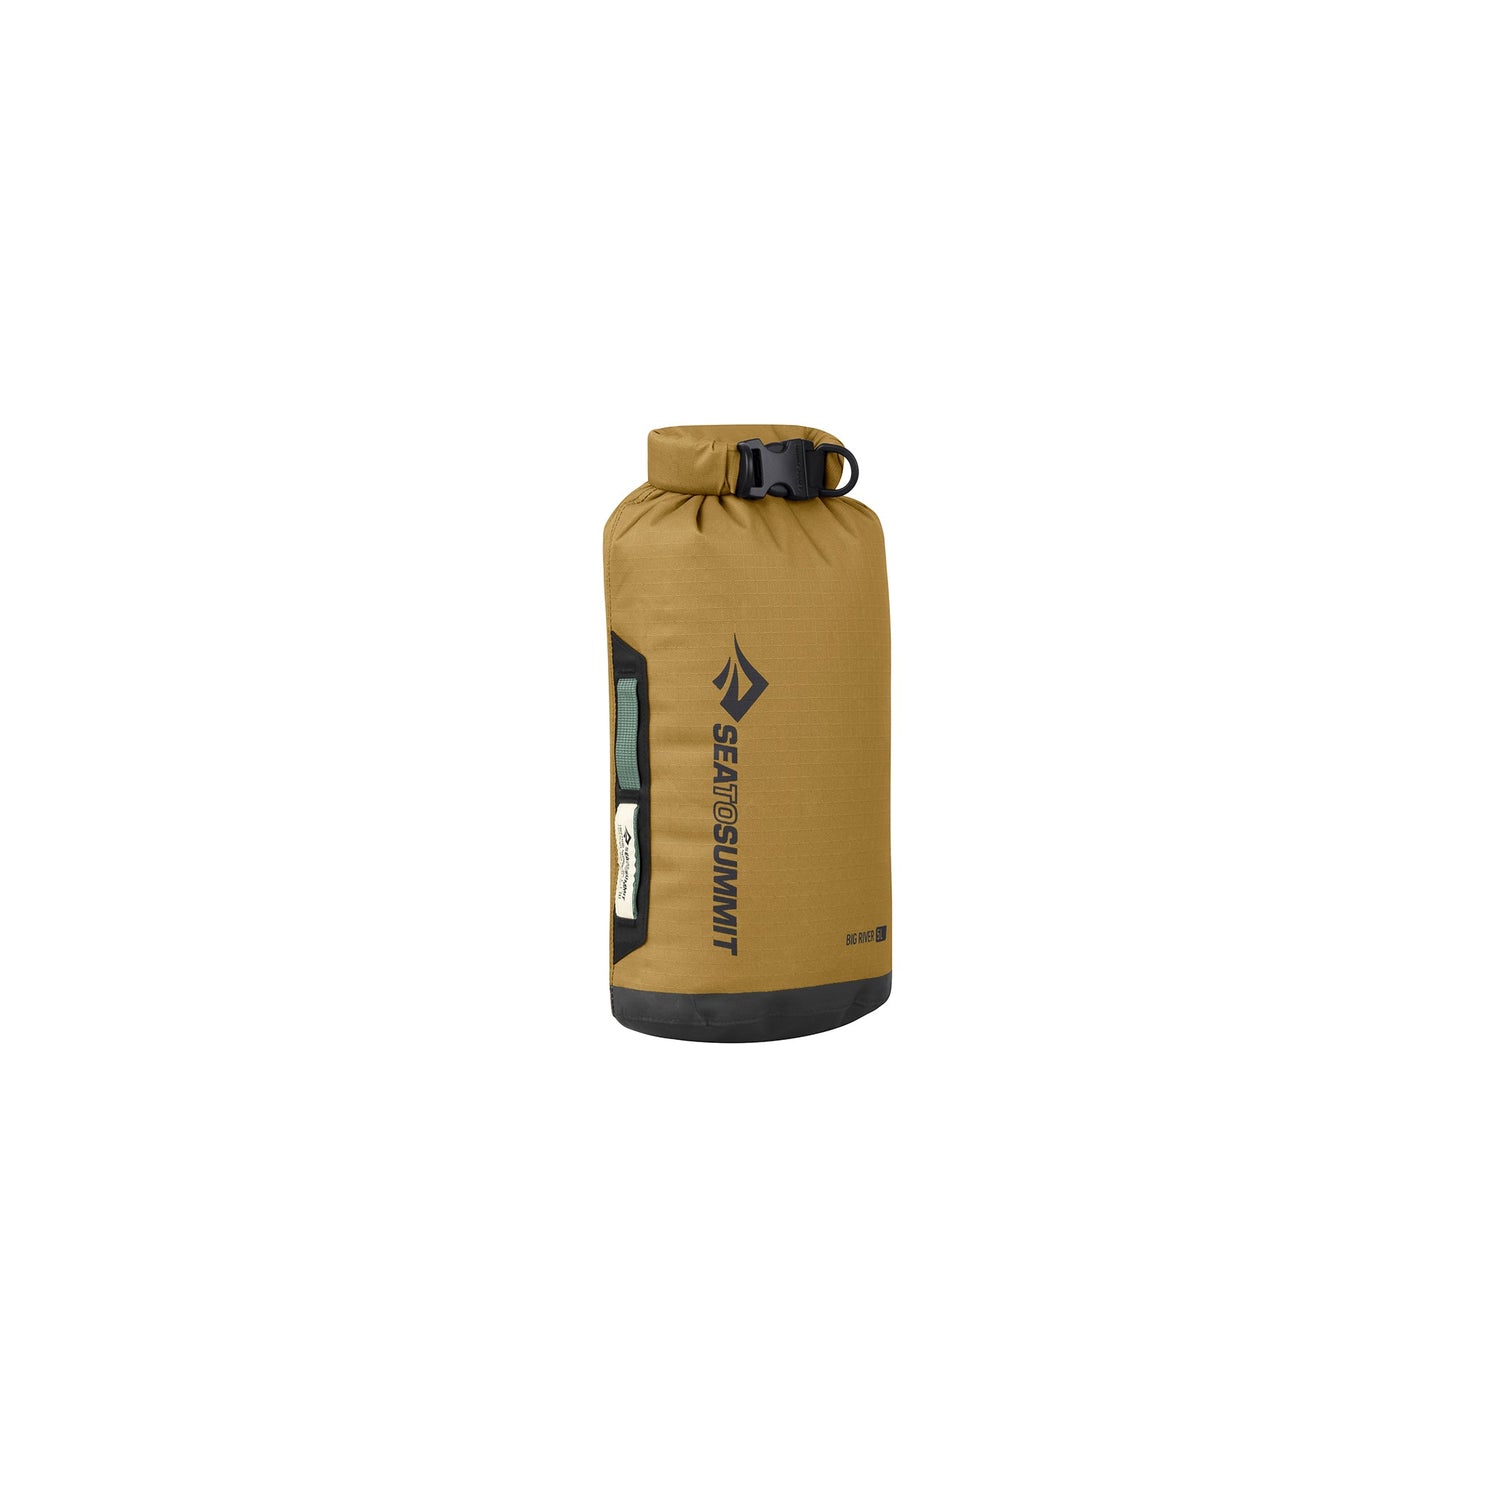 5 litre / Gold Brown || Big River Dry Bag